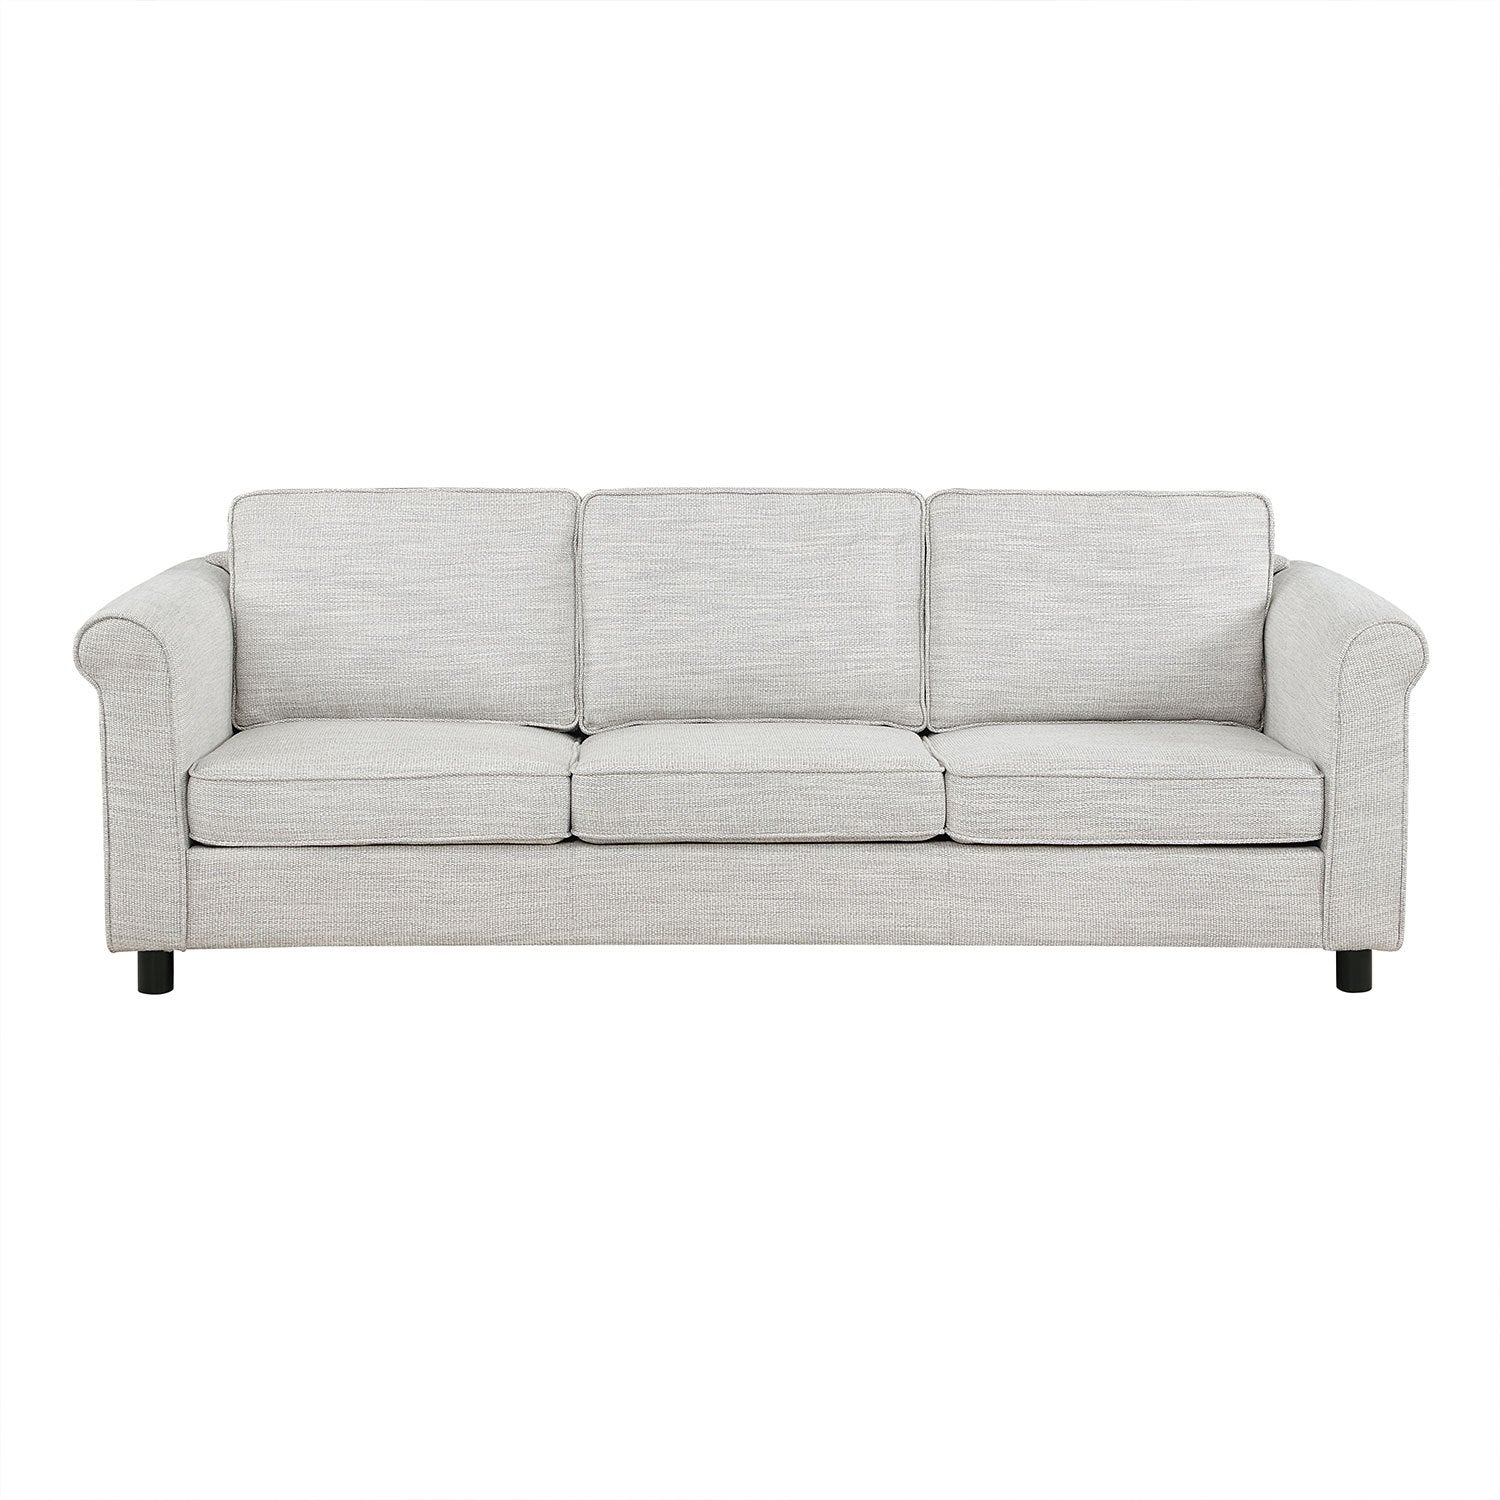 89.37inch 3 Seats Upholstered Sofa, Bishop Beige beige-fabric